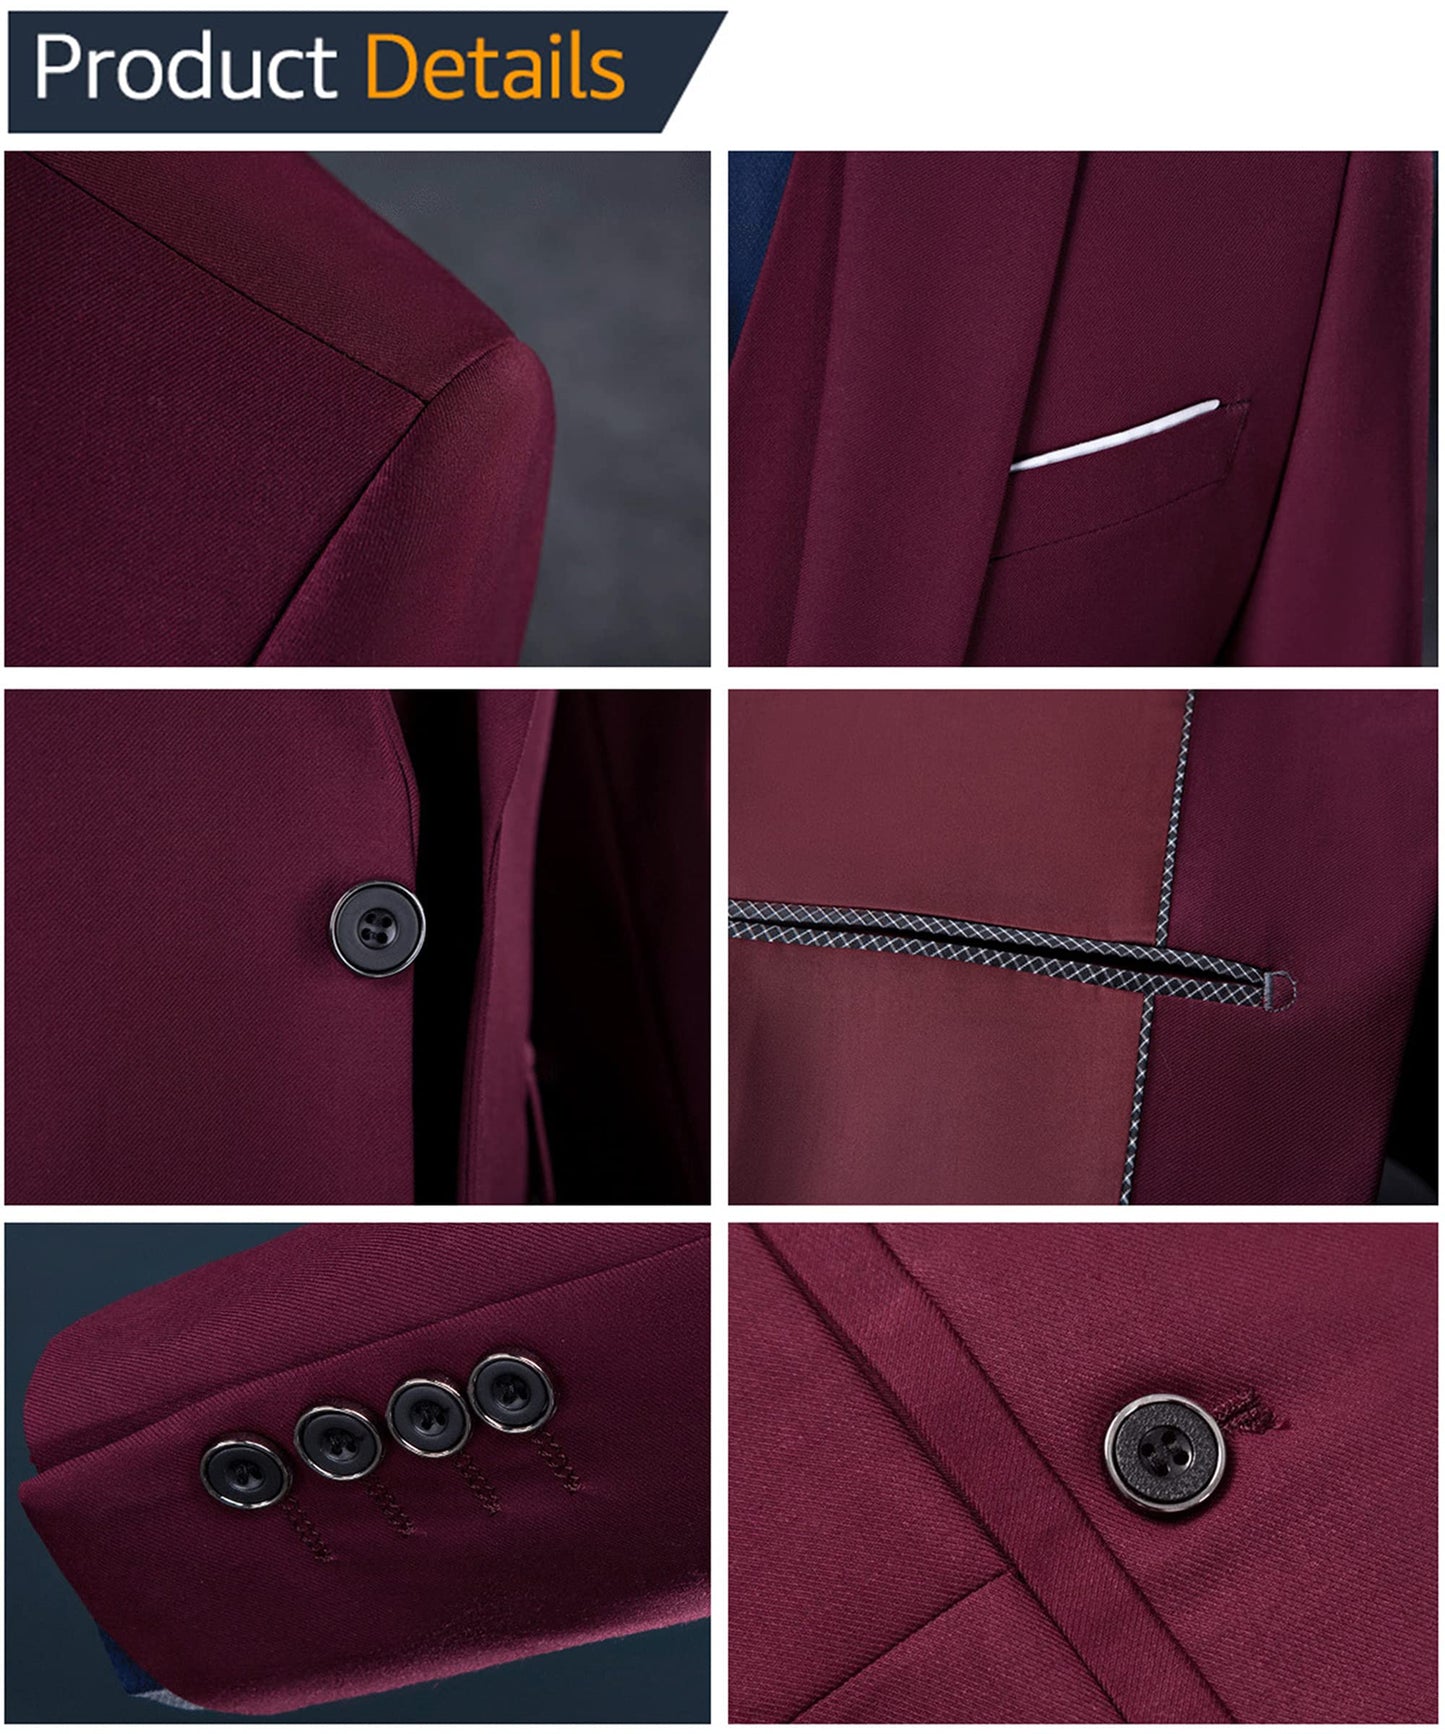 MrSure Men’s 3 Piece Suit Blazer, Slim Fit Tux with One Button, Jacket Vest Pants & Tie Set for Party, Wedding and Business Deep Green